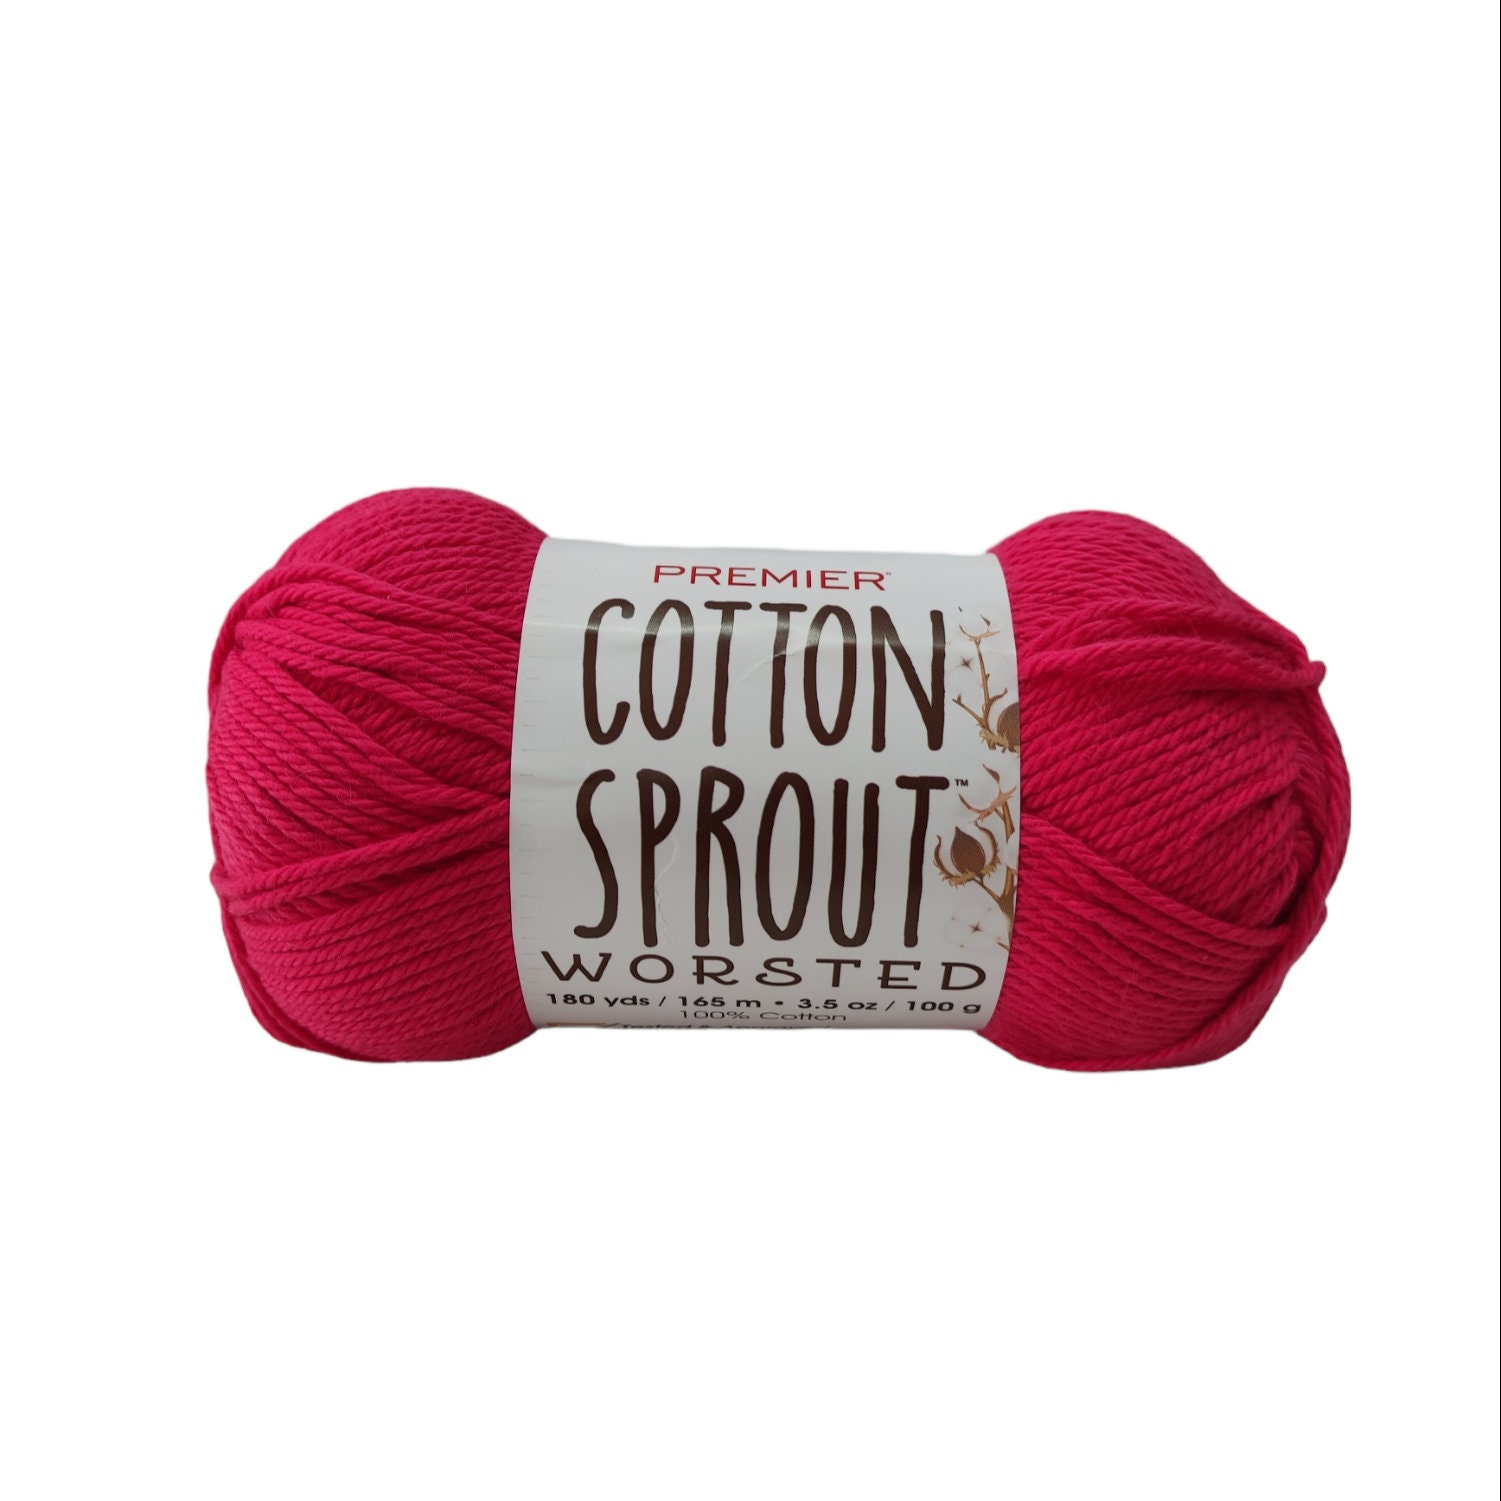 4 Ply Milk Cotton Yarn for Crochet and Amigurumi, Small Ball of 23